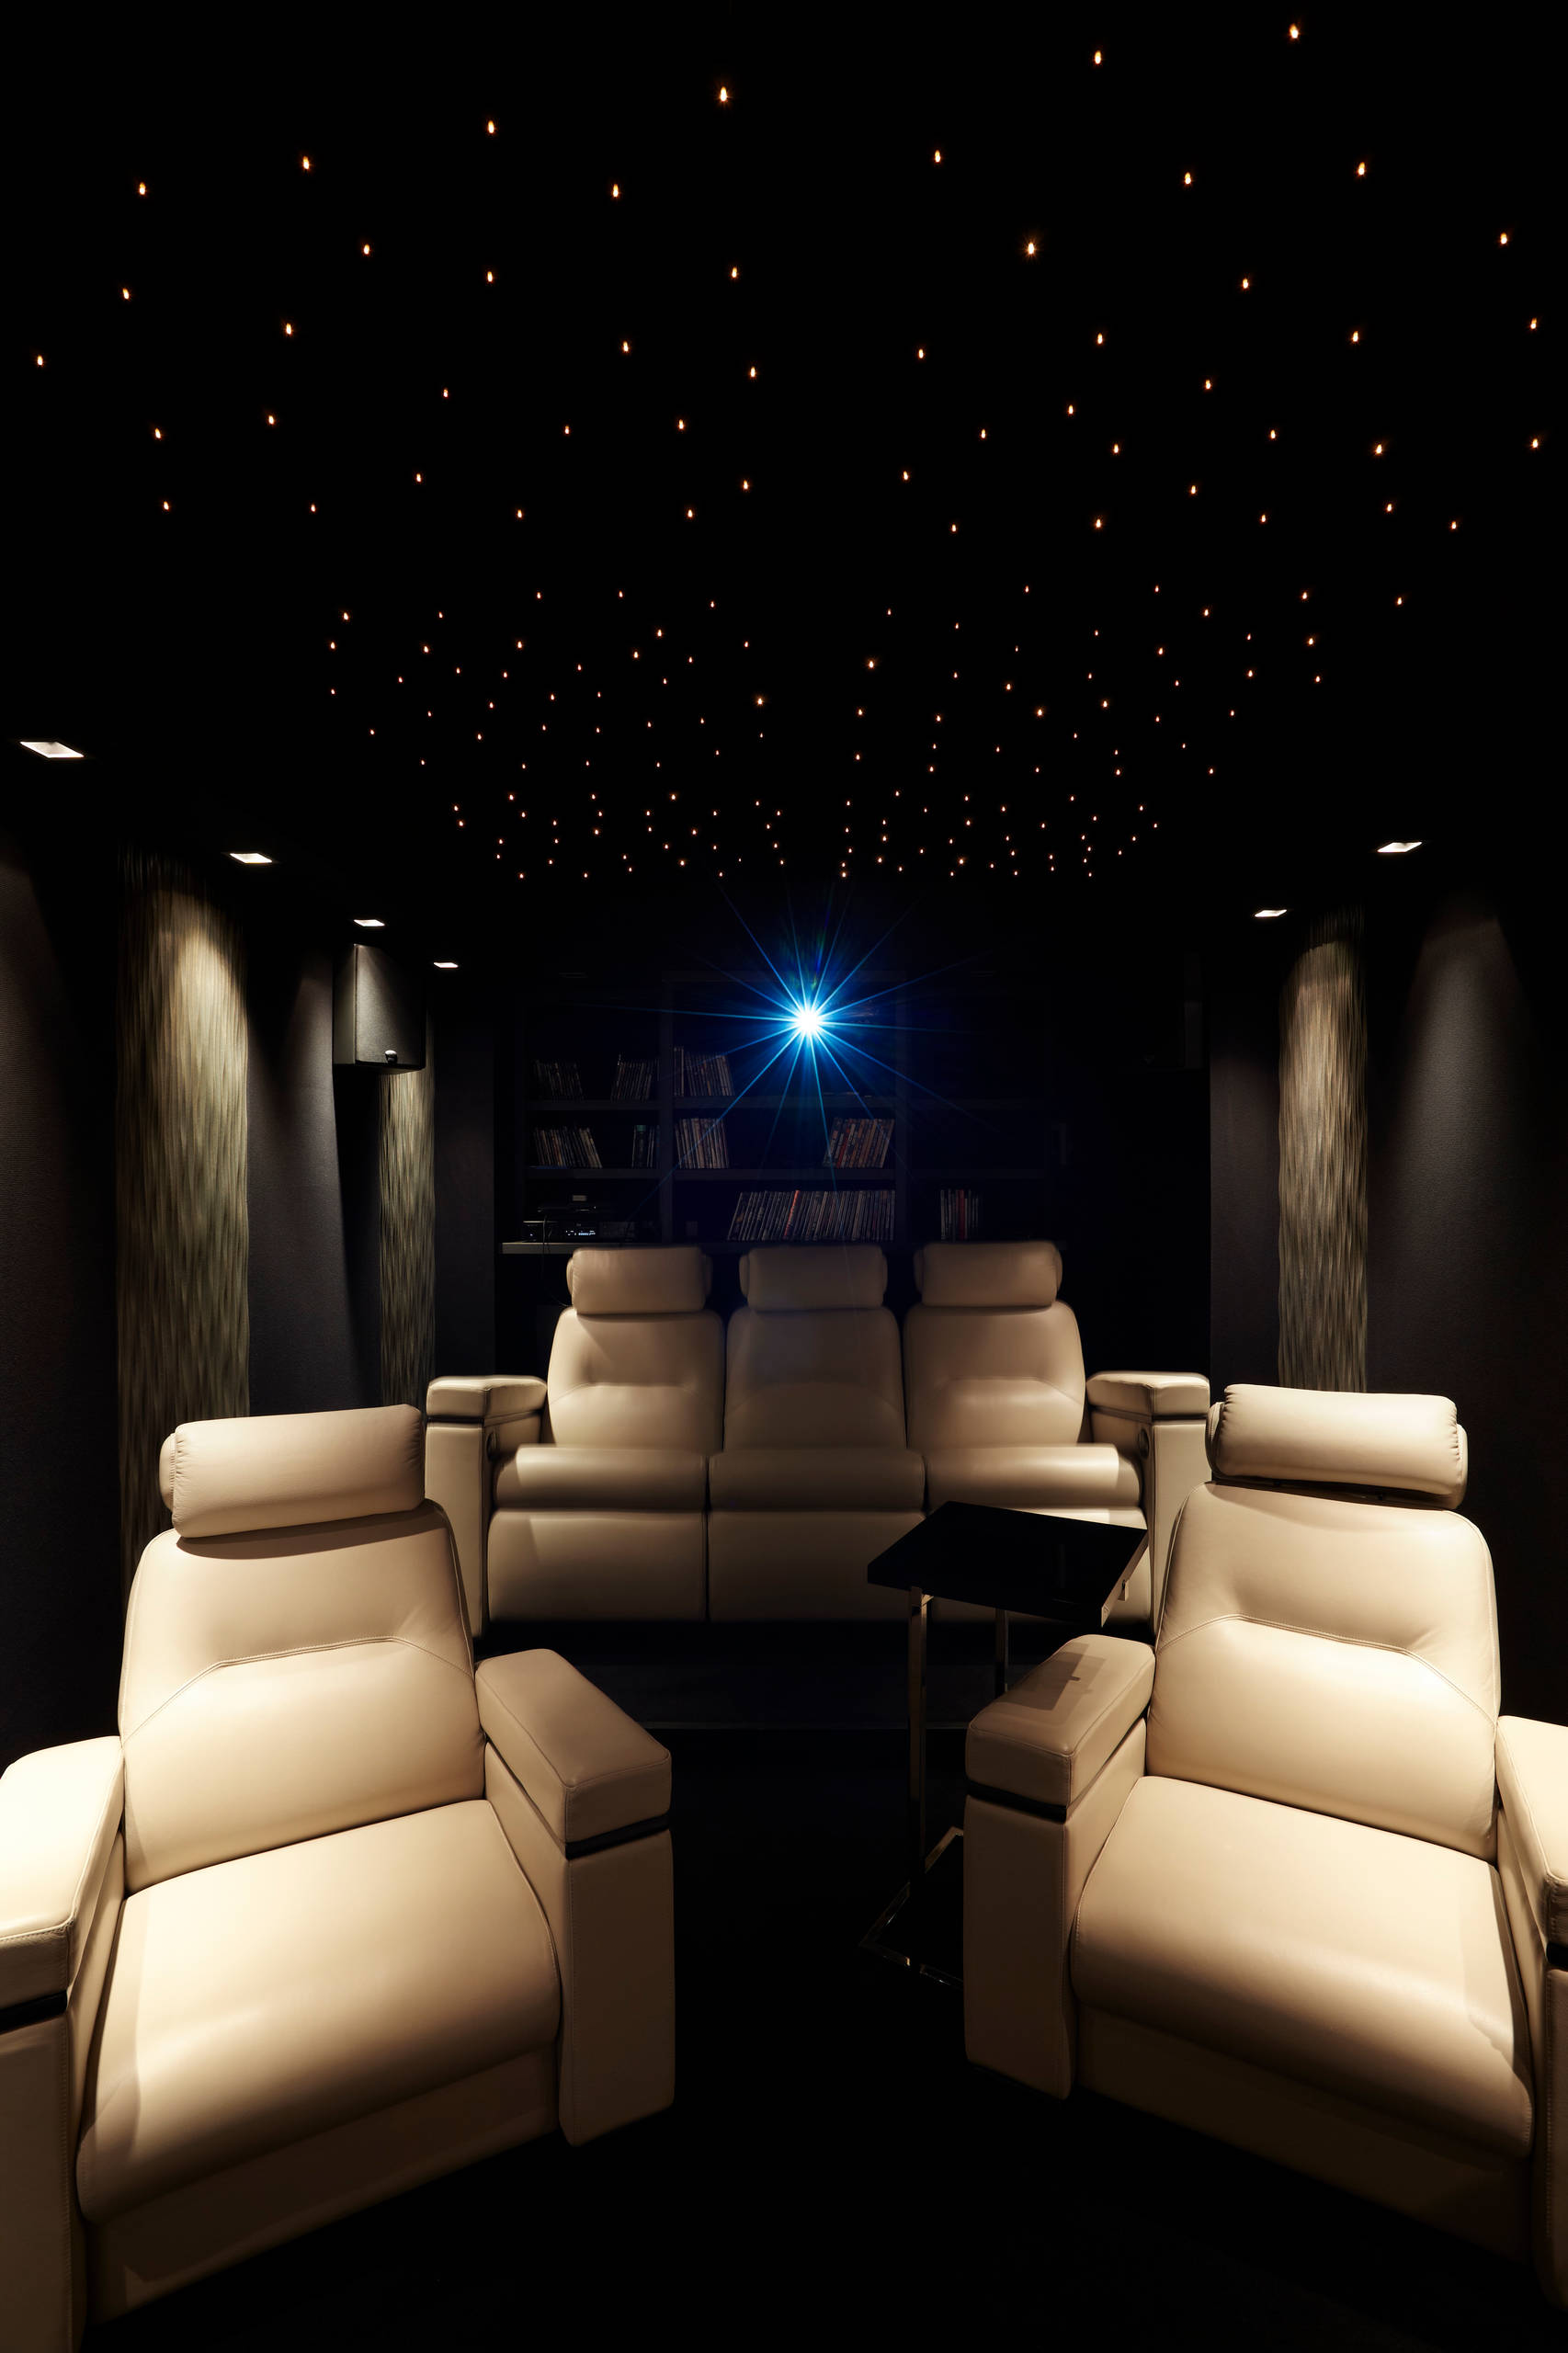 8 Home Theater Ideas for Ultimate Movie Viewing - Decorilla Online Interior  Design